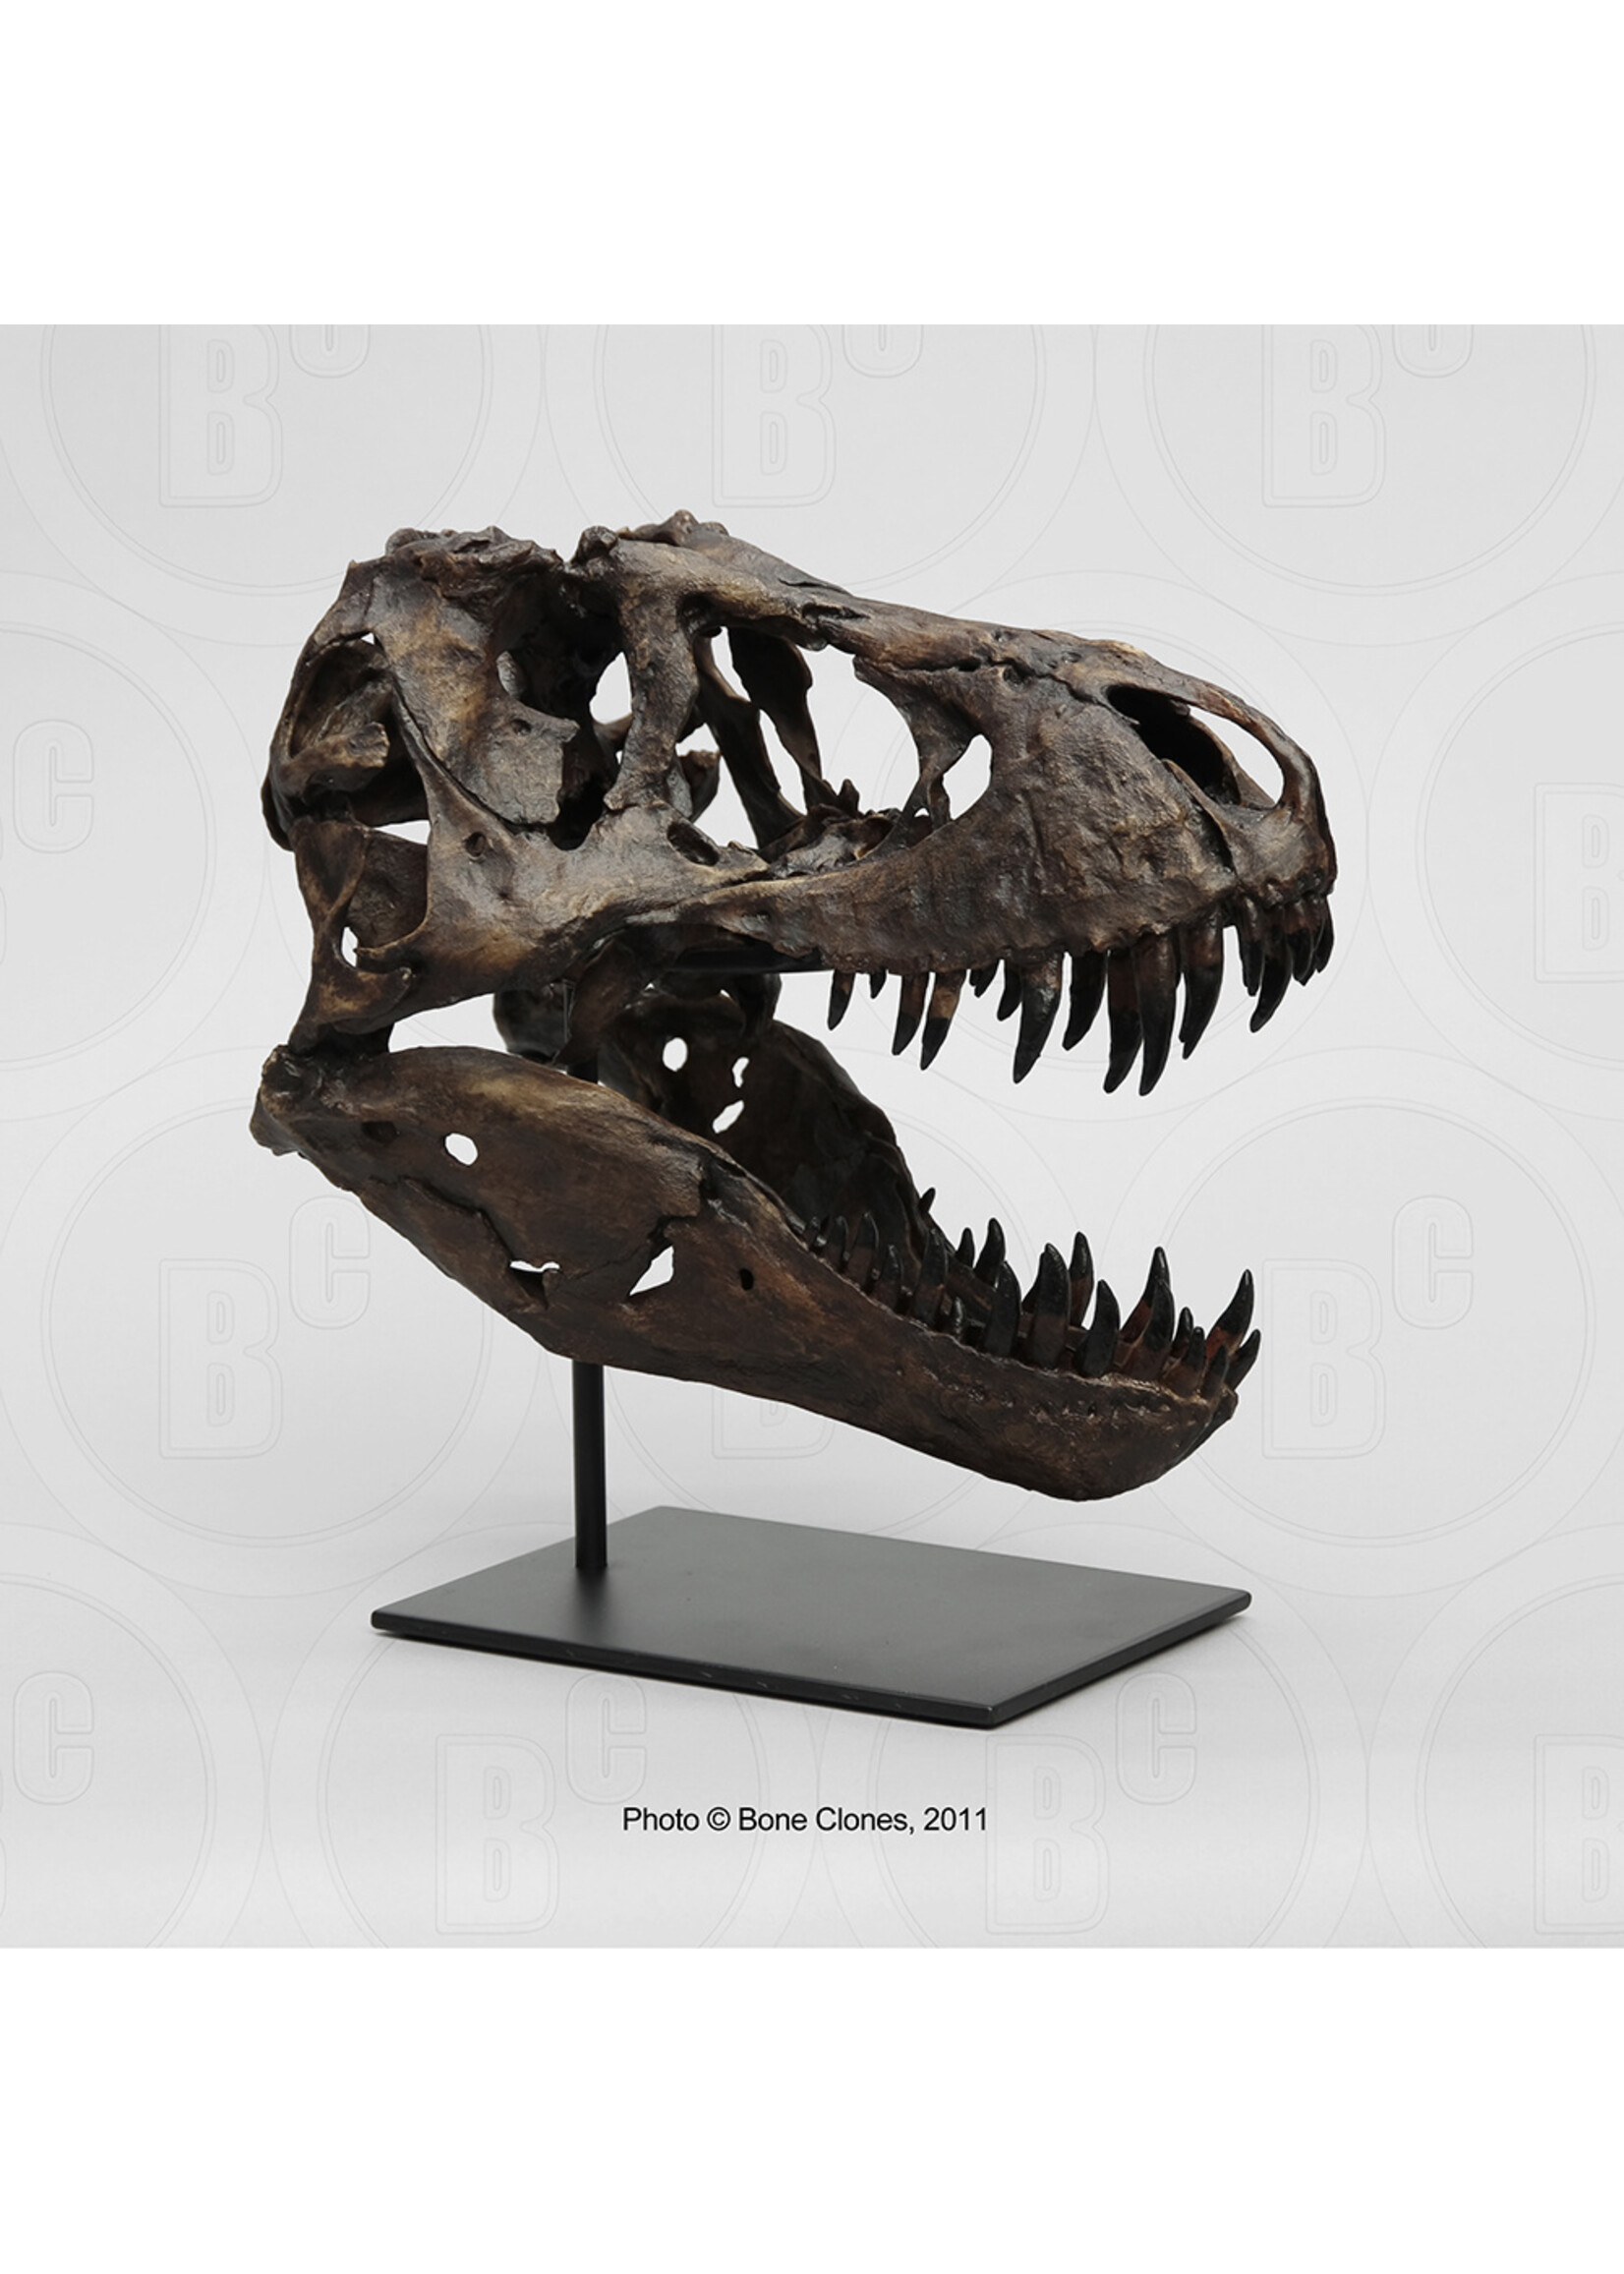 STAN Tyrannosaurus rex ® - 1/6 Scale Skull Rapid Prototype - Fossil Replica (BHI #127301) - Replicas/Models